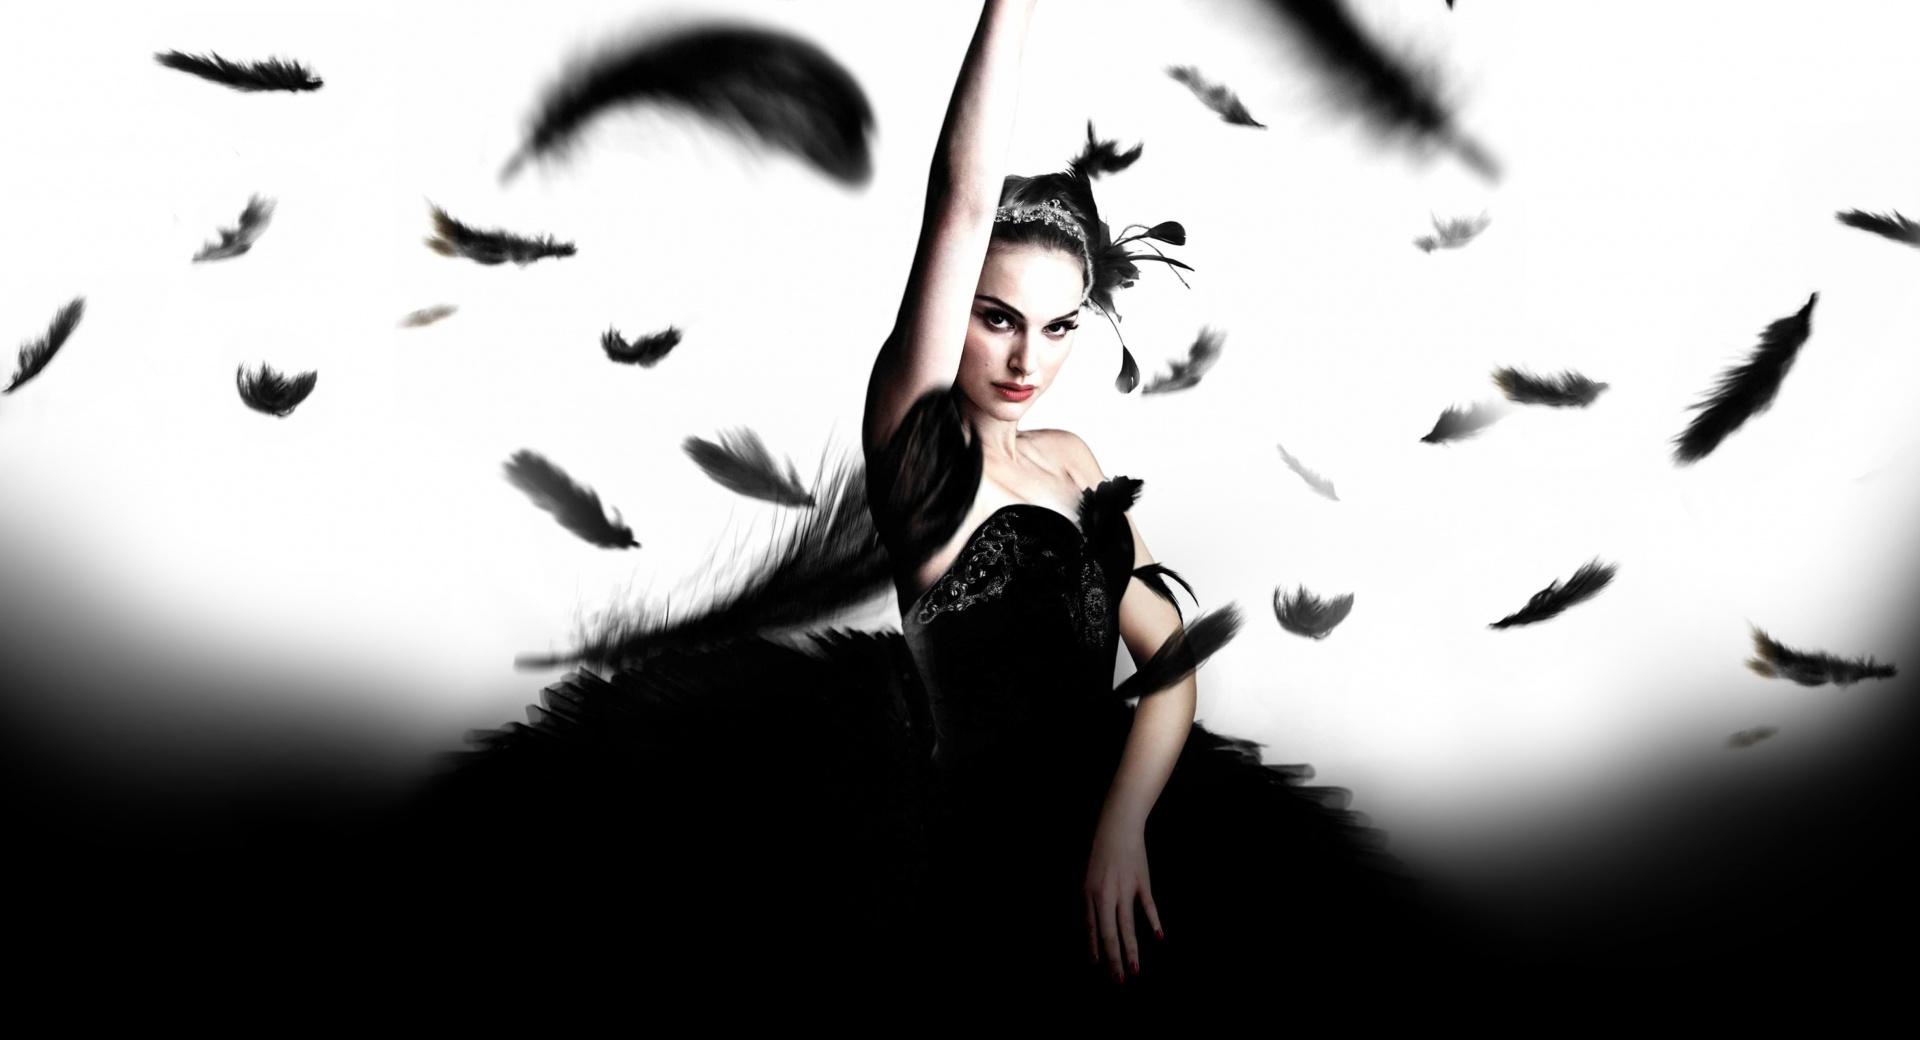 Black Swan Natalie Portman at 1600 x 1200 size wallpapers HD quality